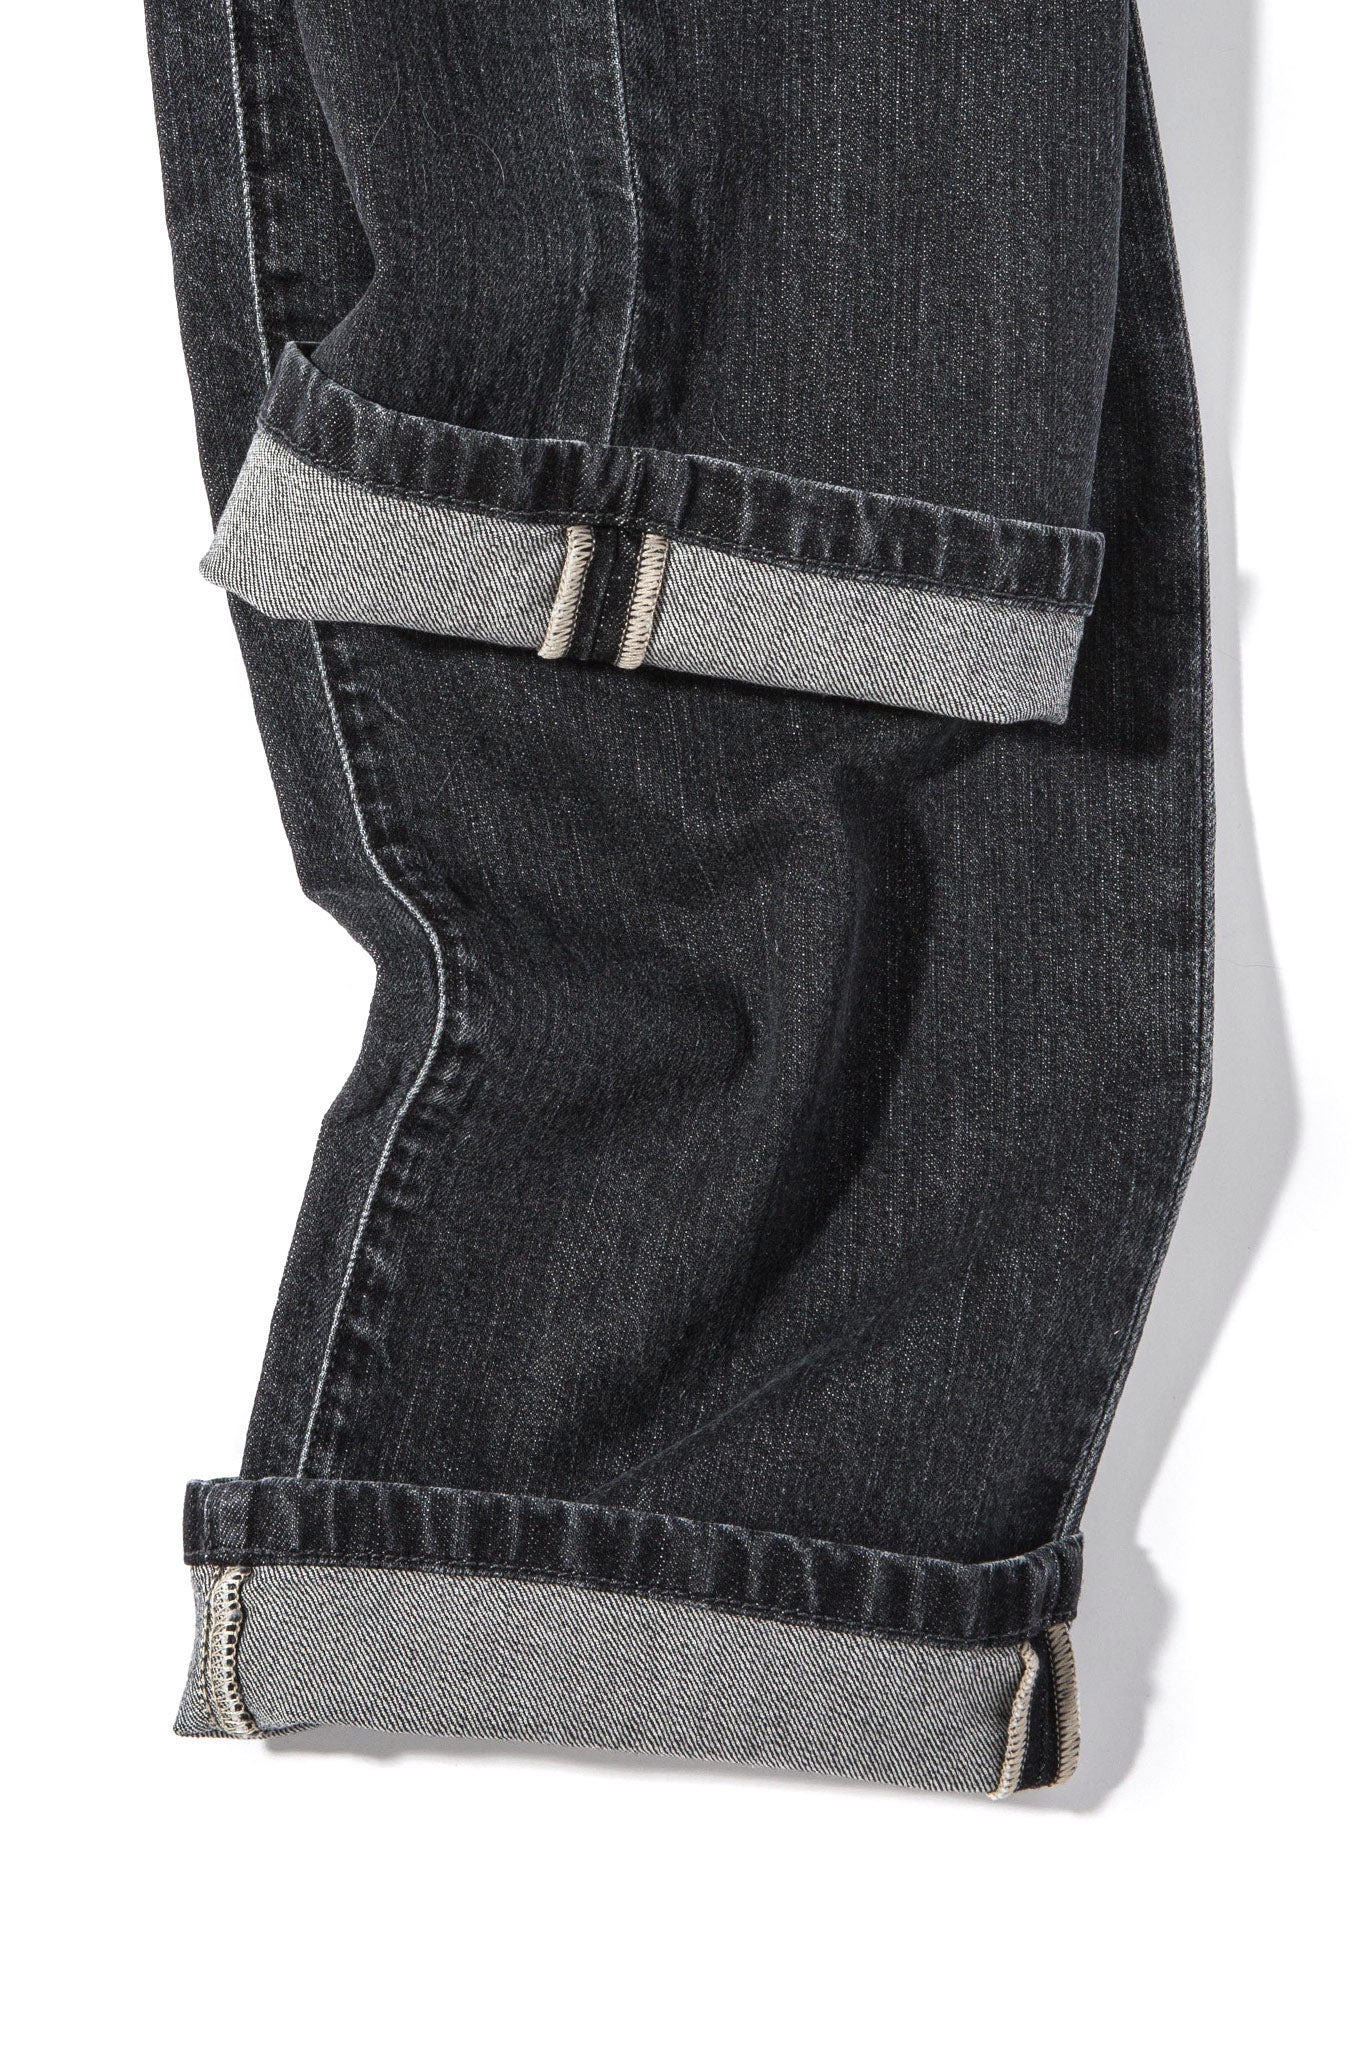 Axel's Parker Jean in Dark Grey Anthracite | Mens - Pants - 5 Pocket | Axels Premium Denim